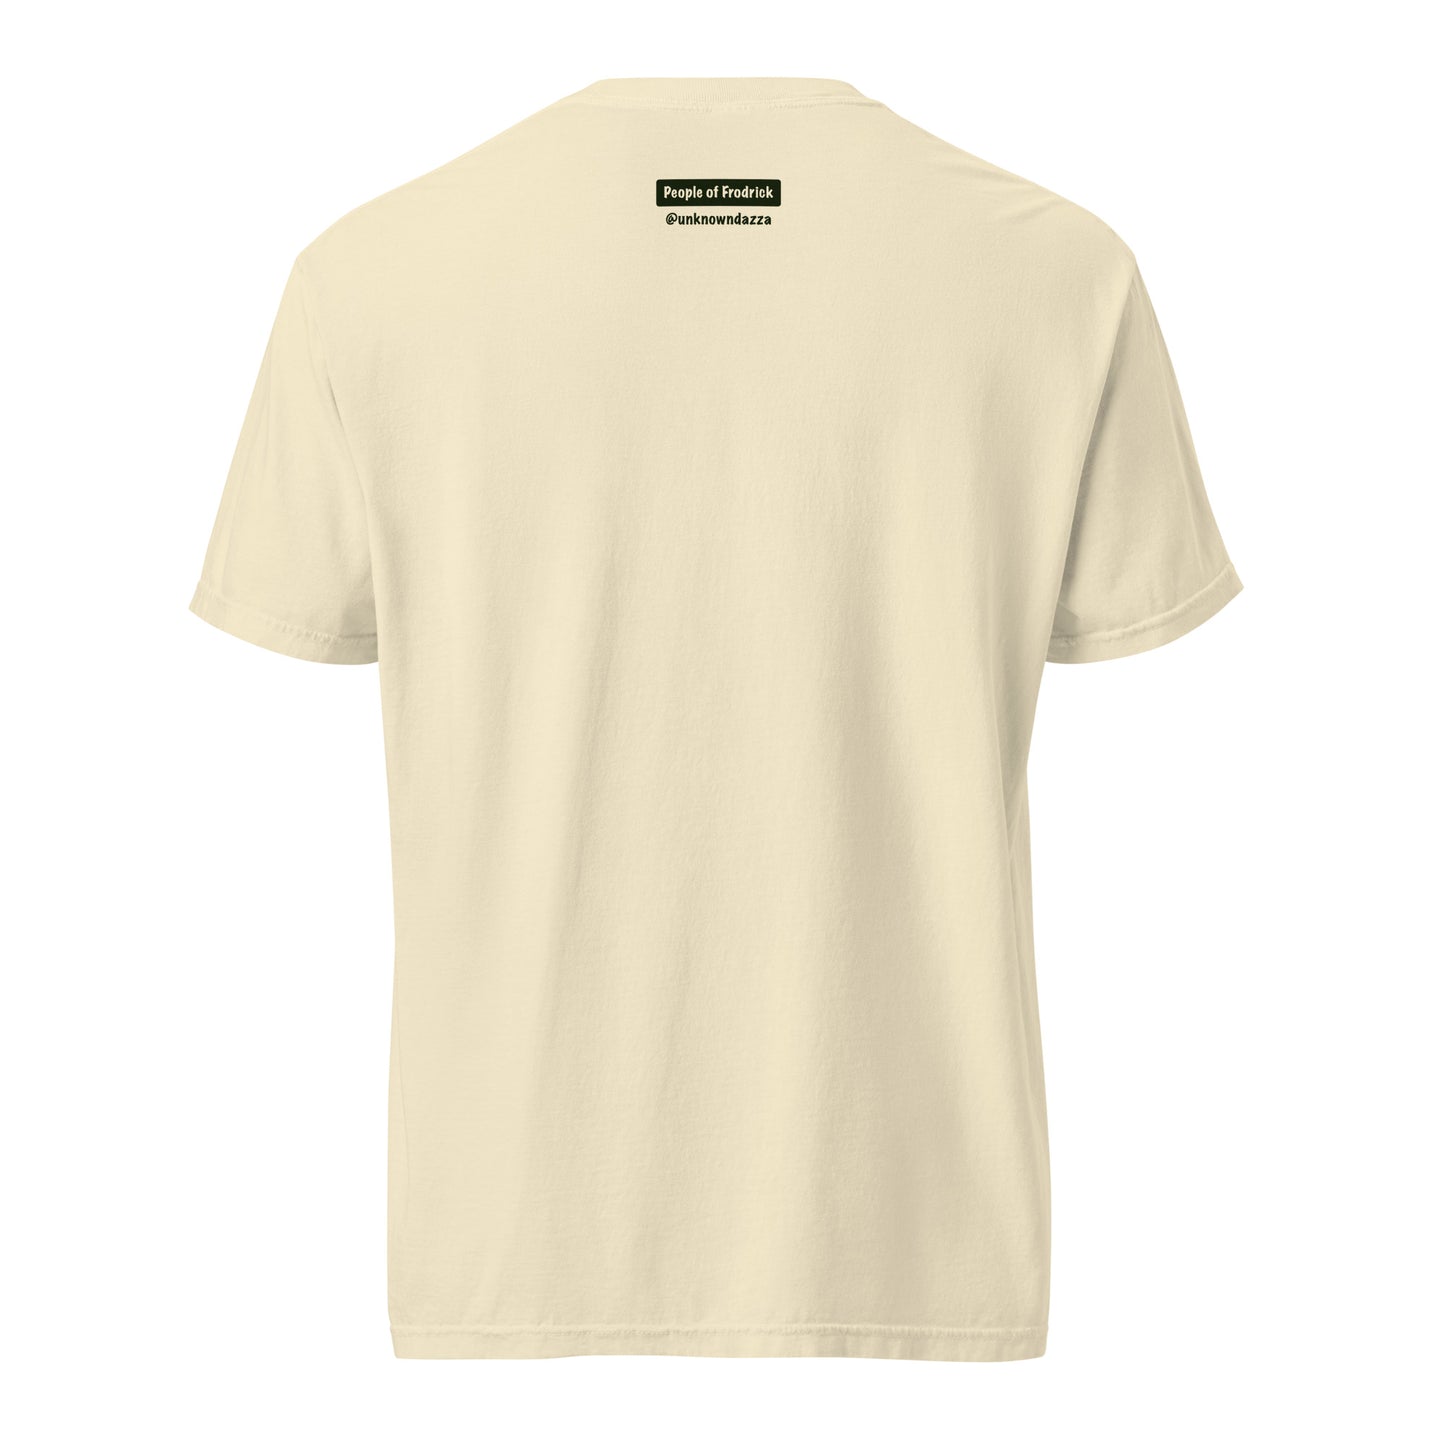 PocketFrod Shirt